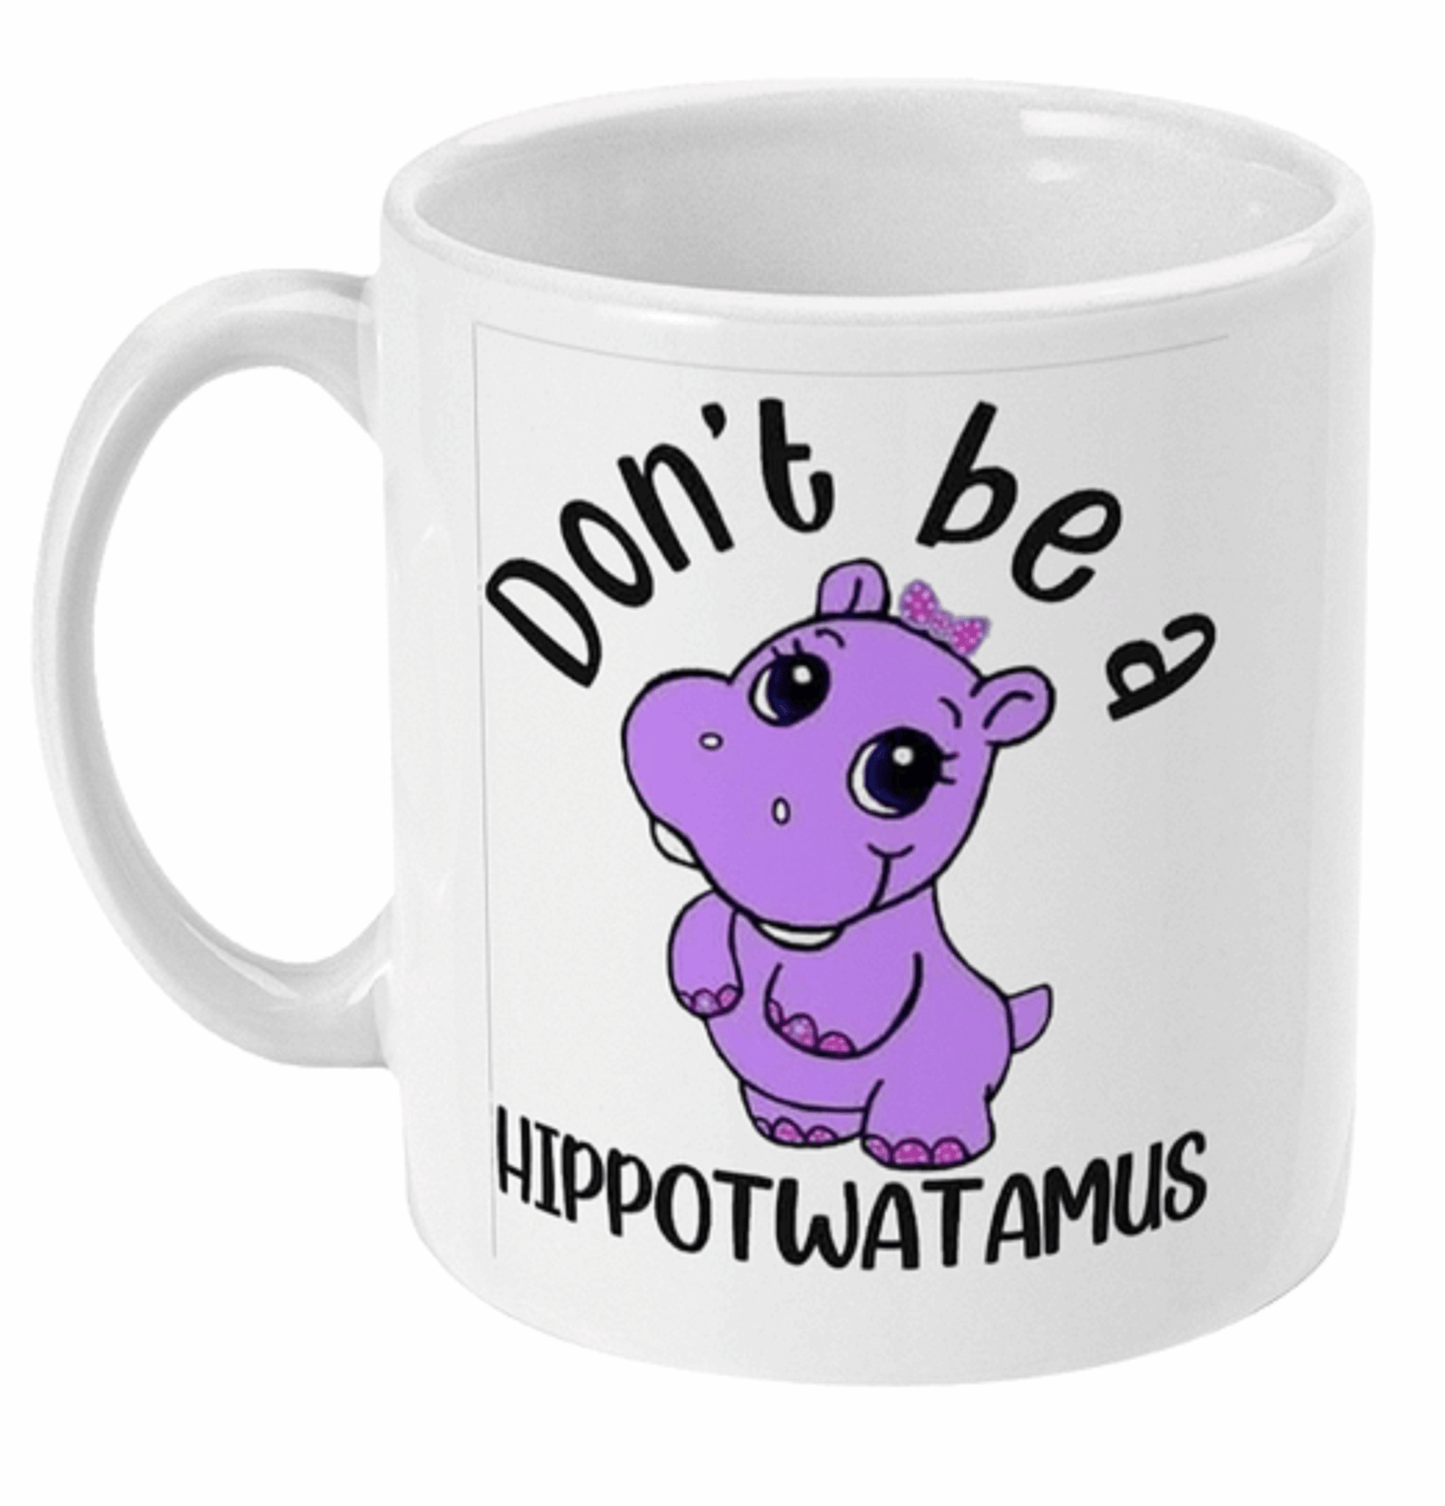  Don't Be a Hippotwatamus Coffee Mug by Free Spirit Accessories sold by Free Spirit Accessories